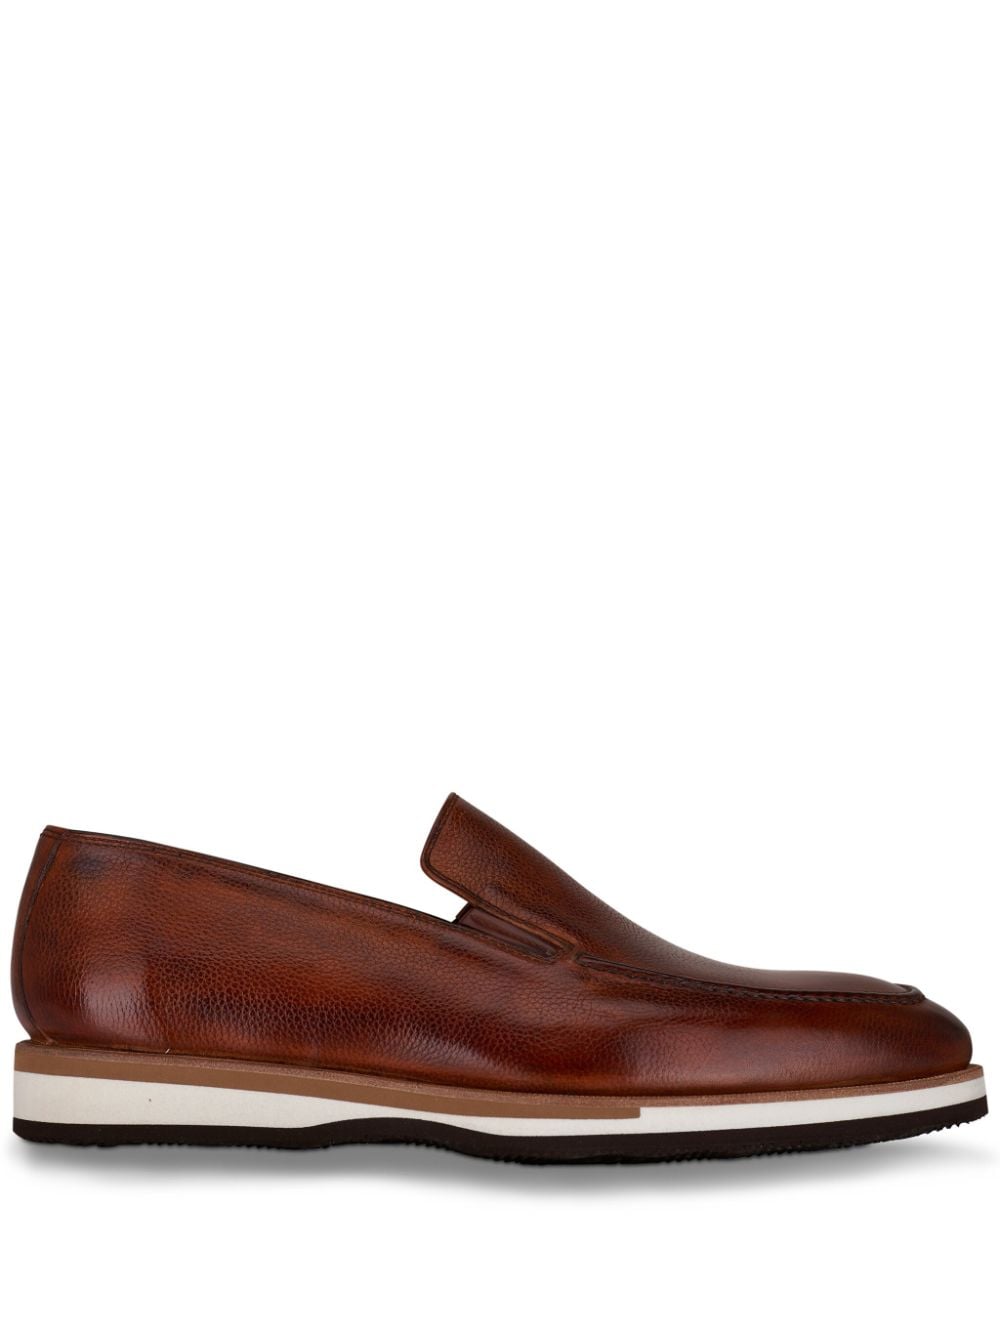 Bontoni Passegio leather loafers - Brown von Bontoni